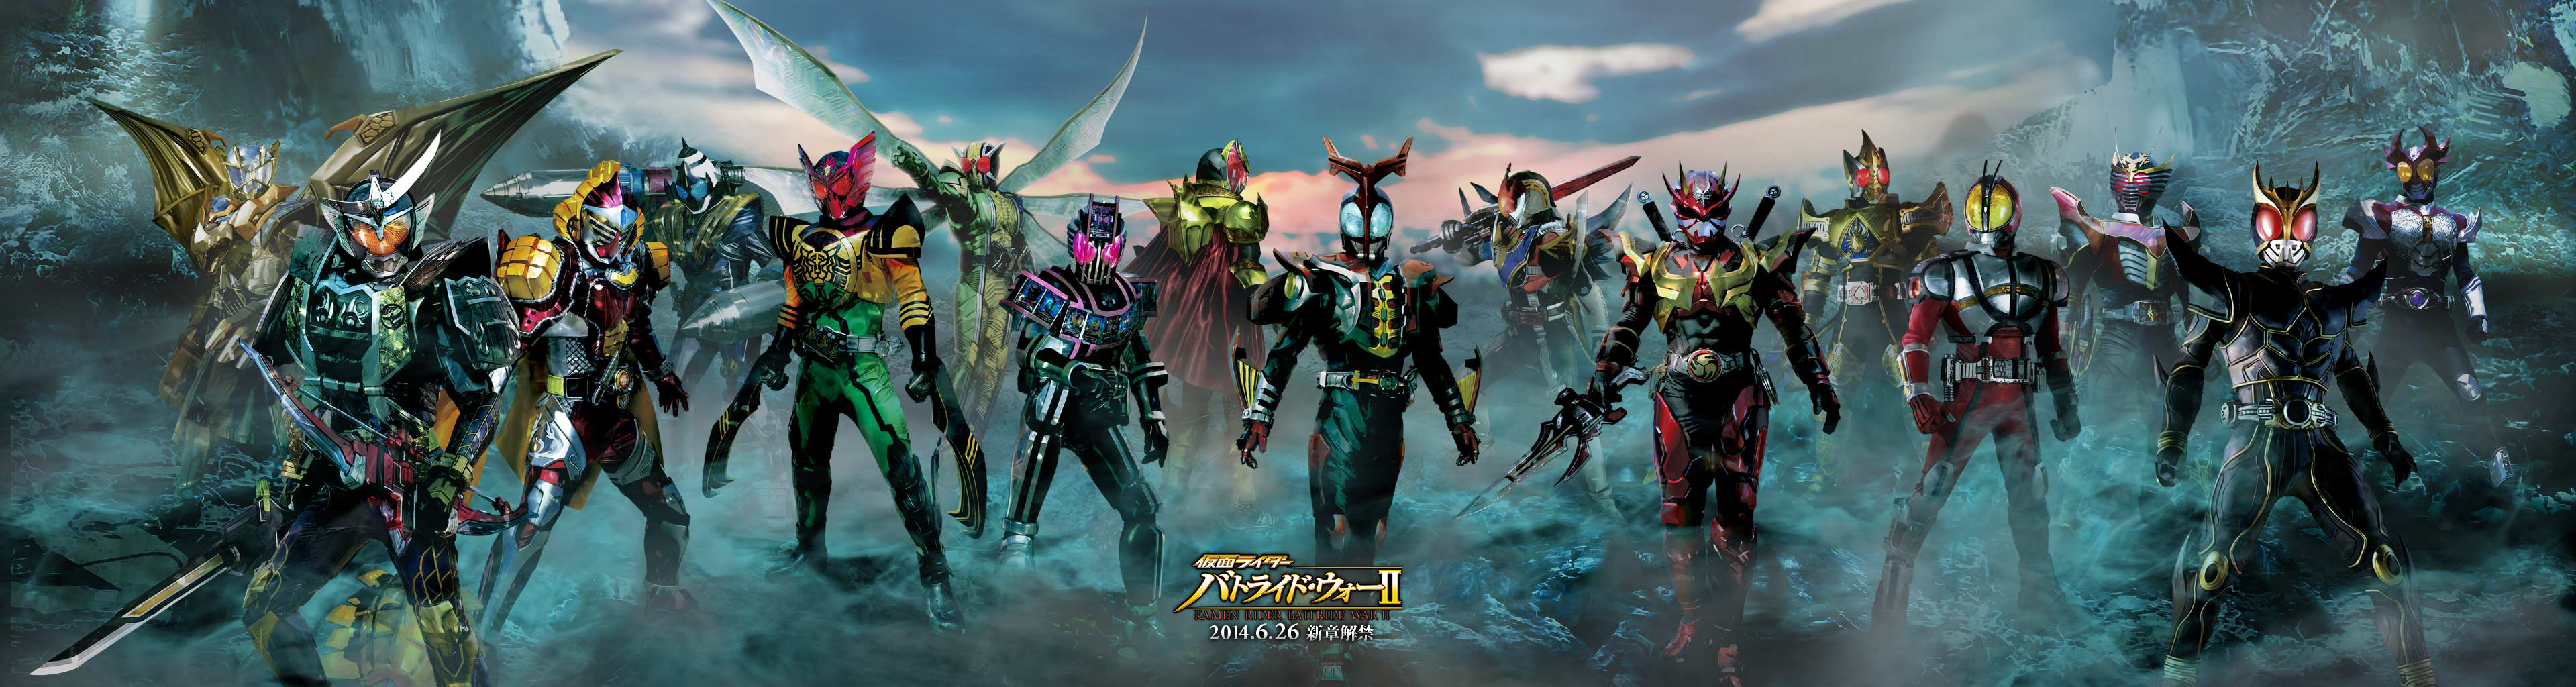 Kamen Rider Battride War II Wallpaper 1 by Kamen-Riders on DeviantArt